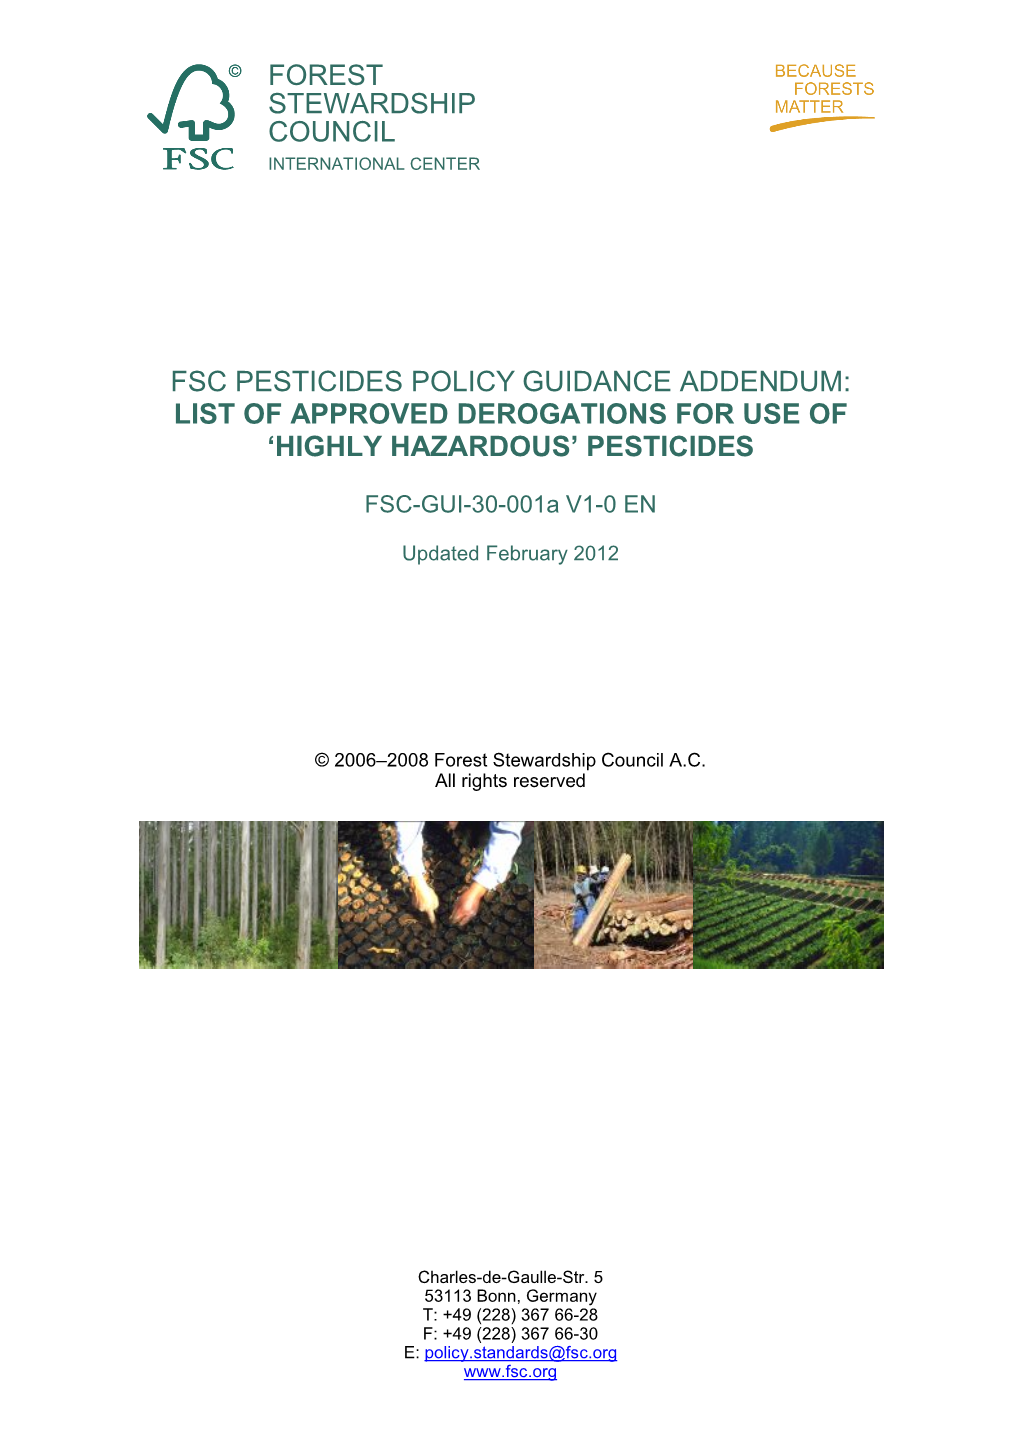 Forest Stewardship Council Fsc Pesticides Policy